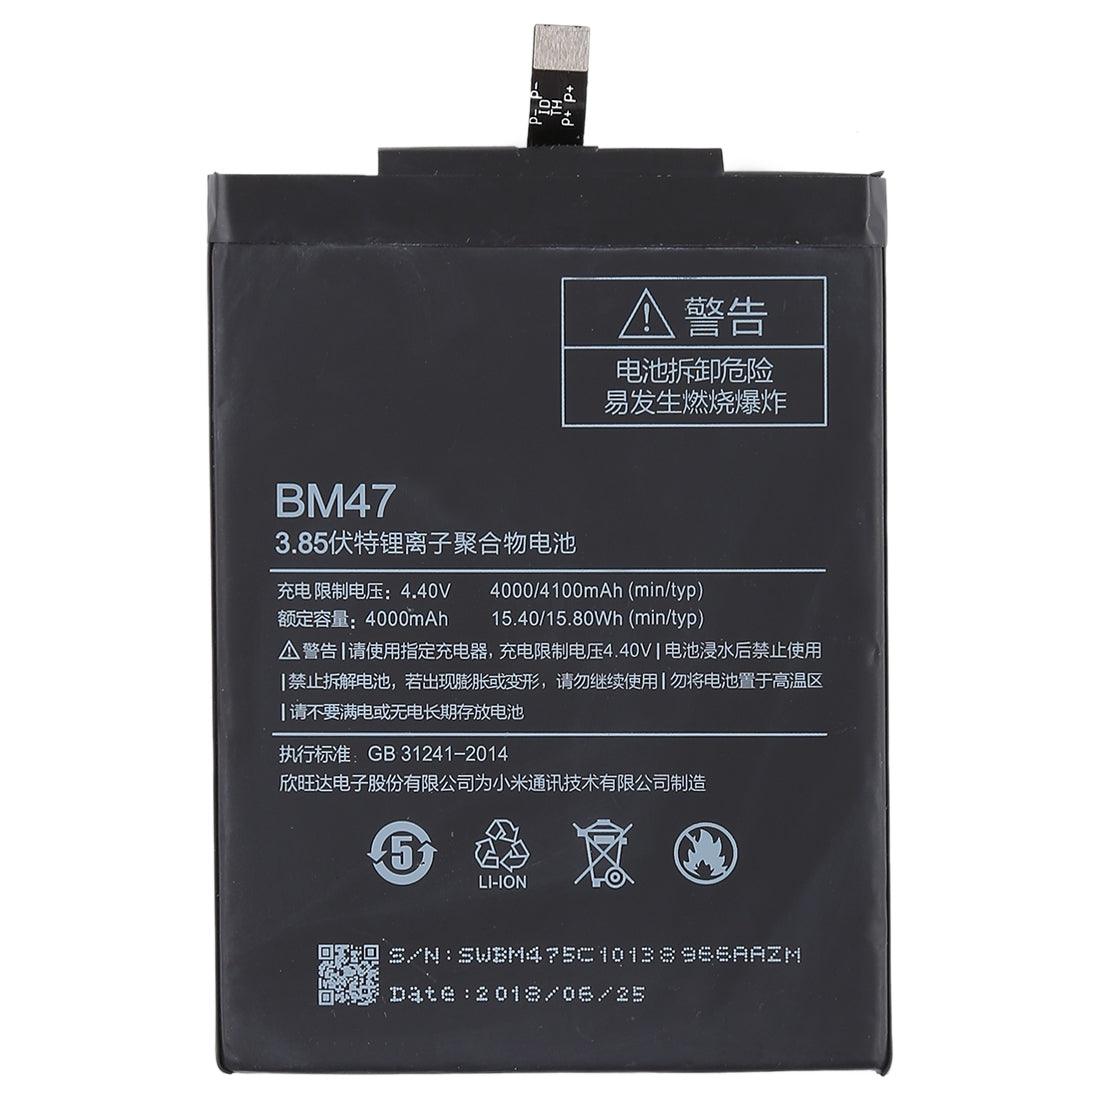 4000 mAh BM47 Battery for Xiaomi Redmi 3S